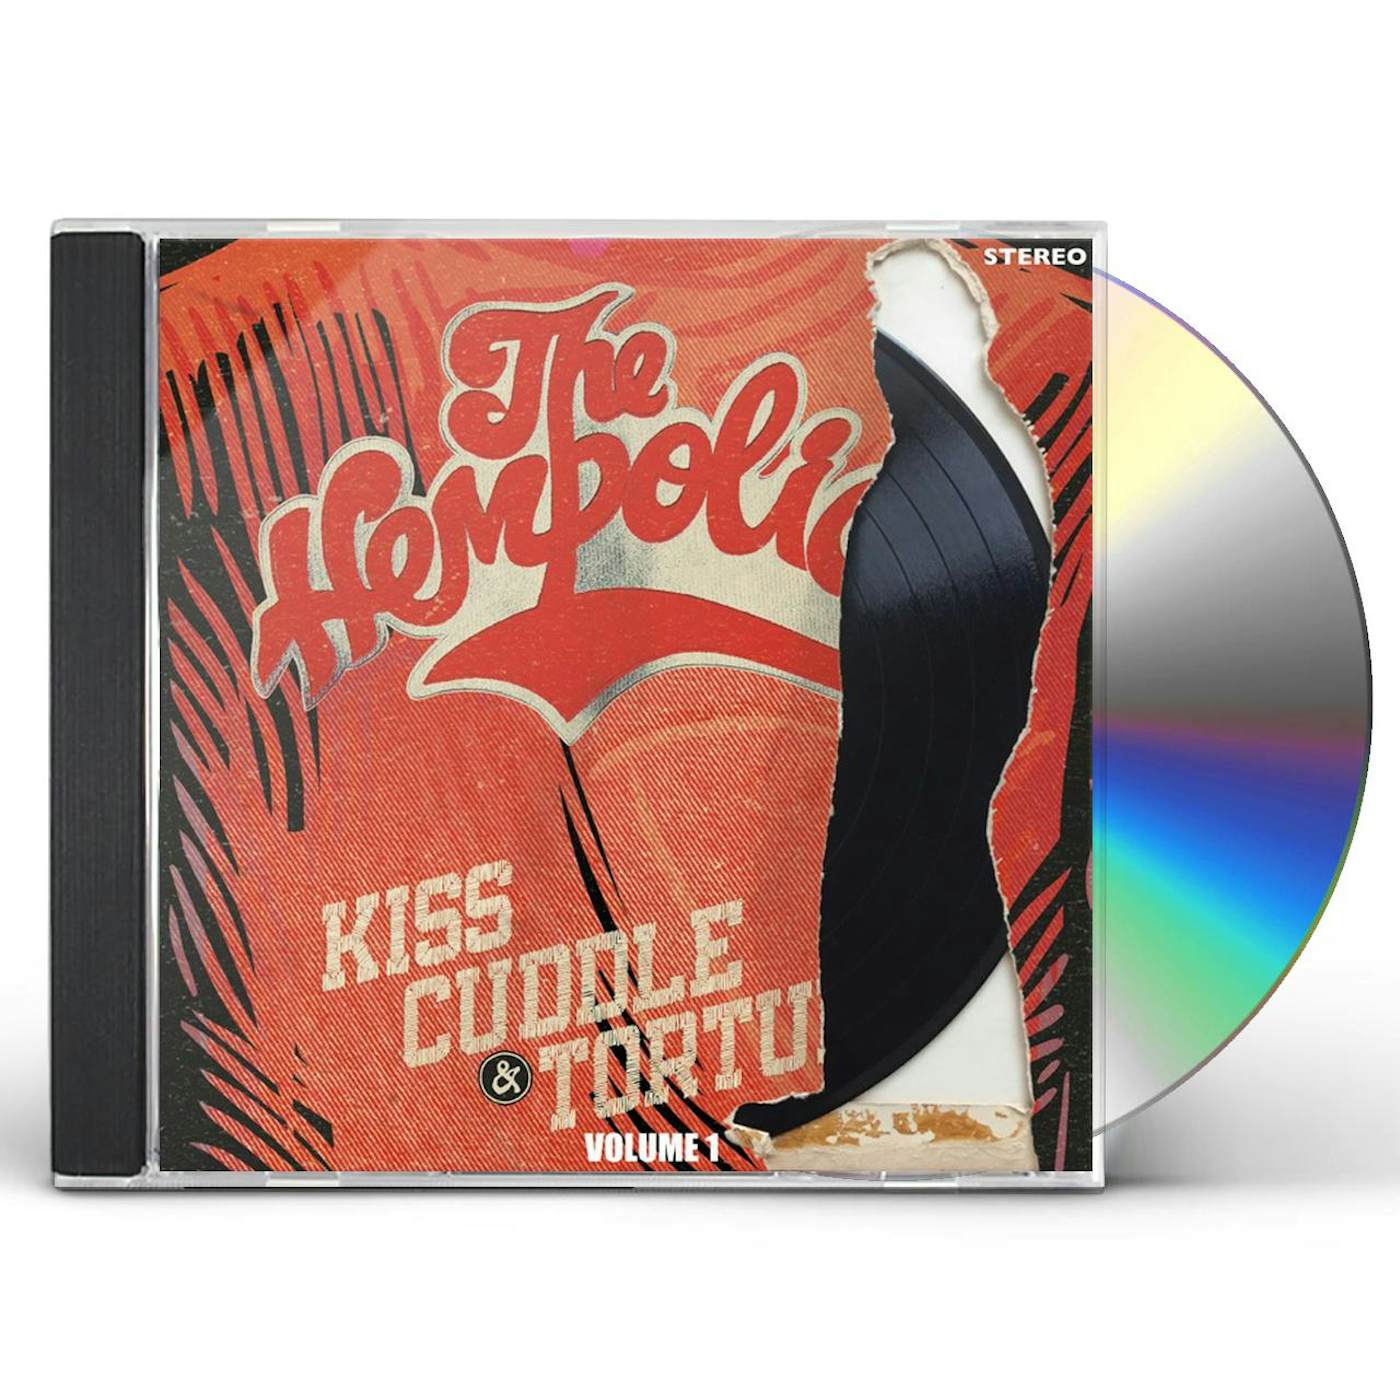 The Hempolics KISS CUDDLE & TORTURE VOL. 1 CD